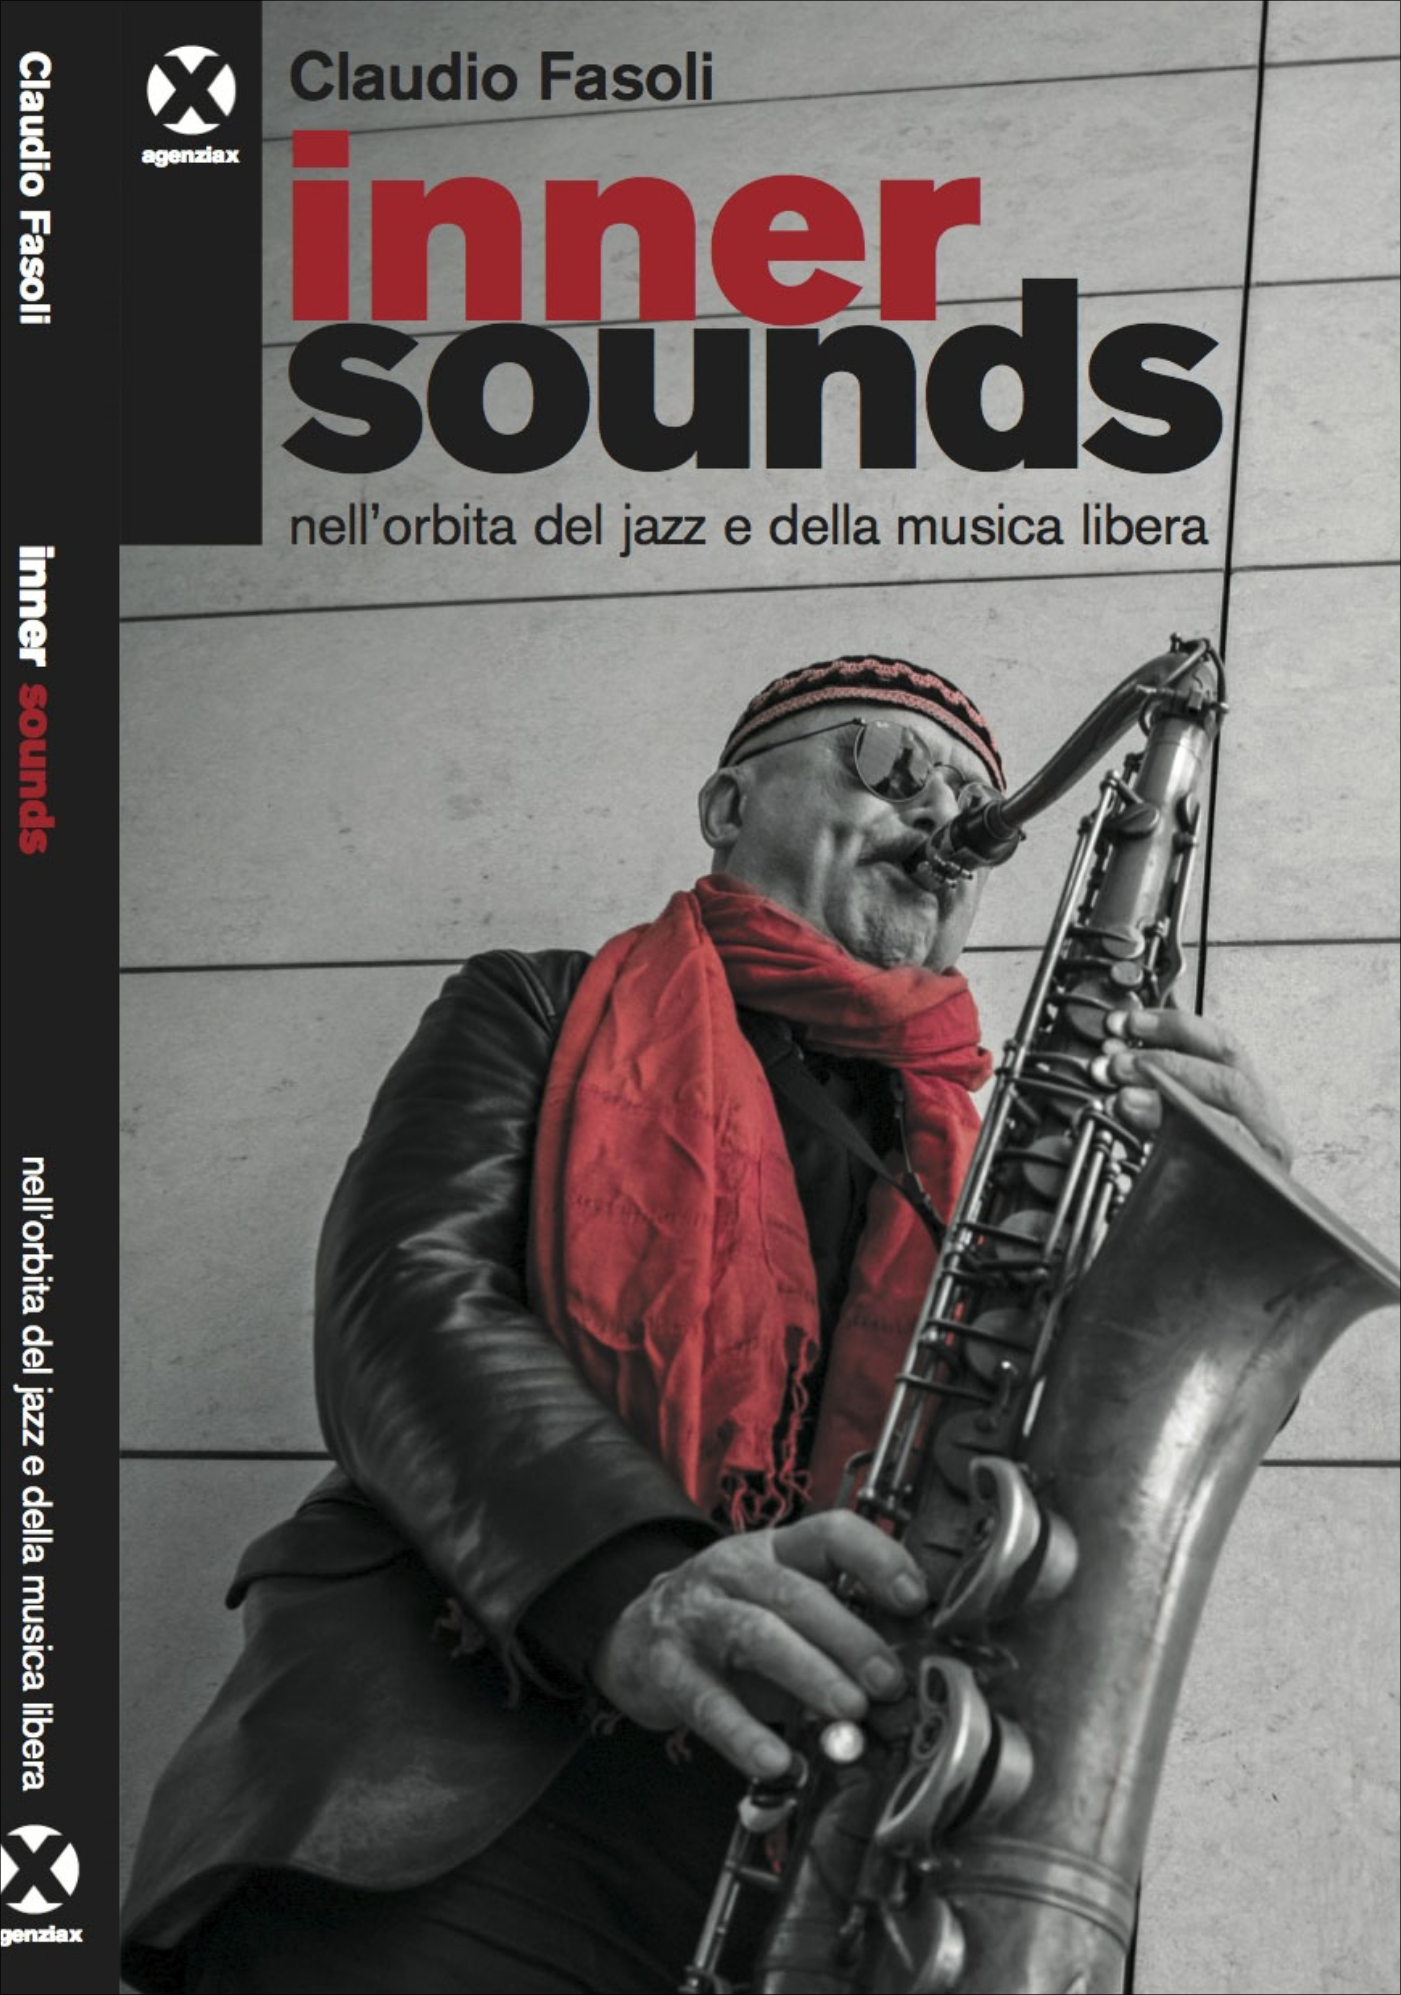 Claudio Fasoli, Inner Sounds